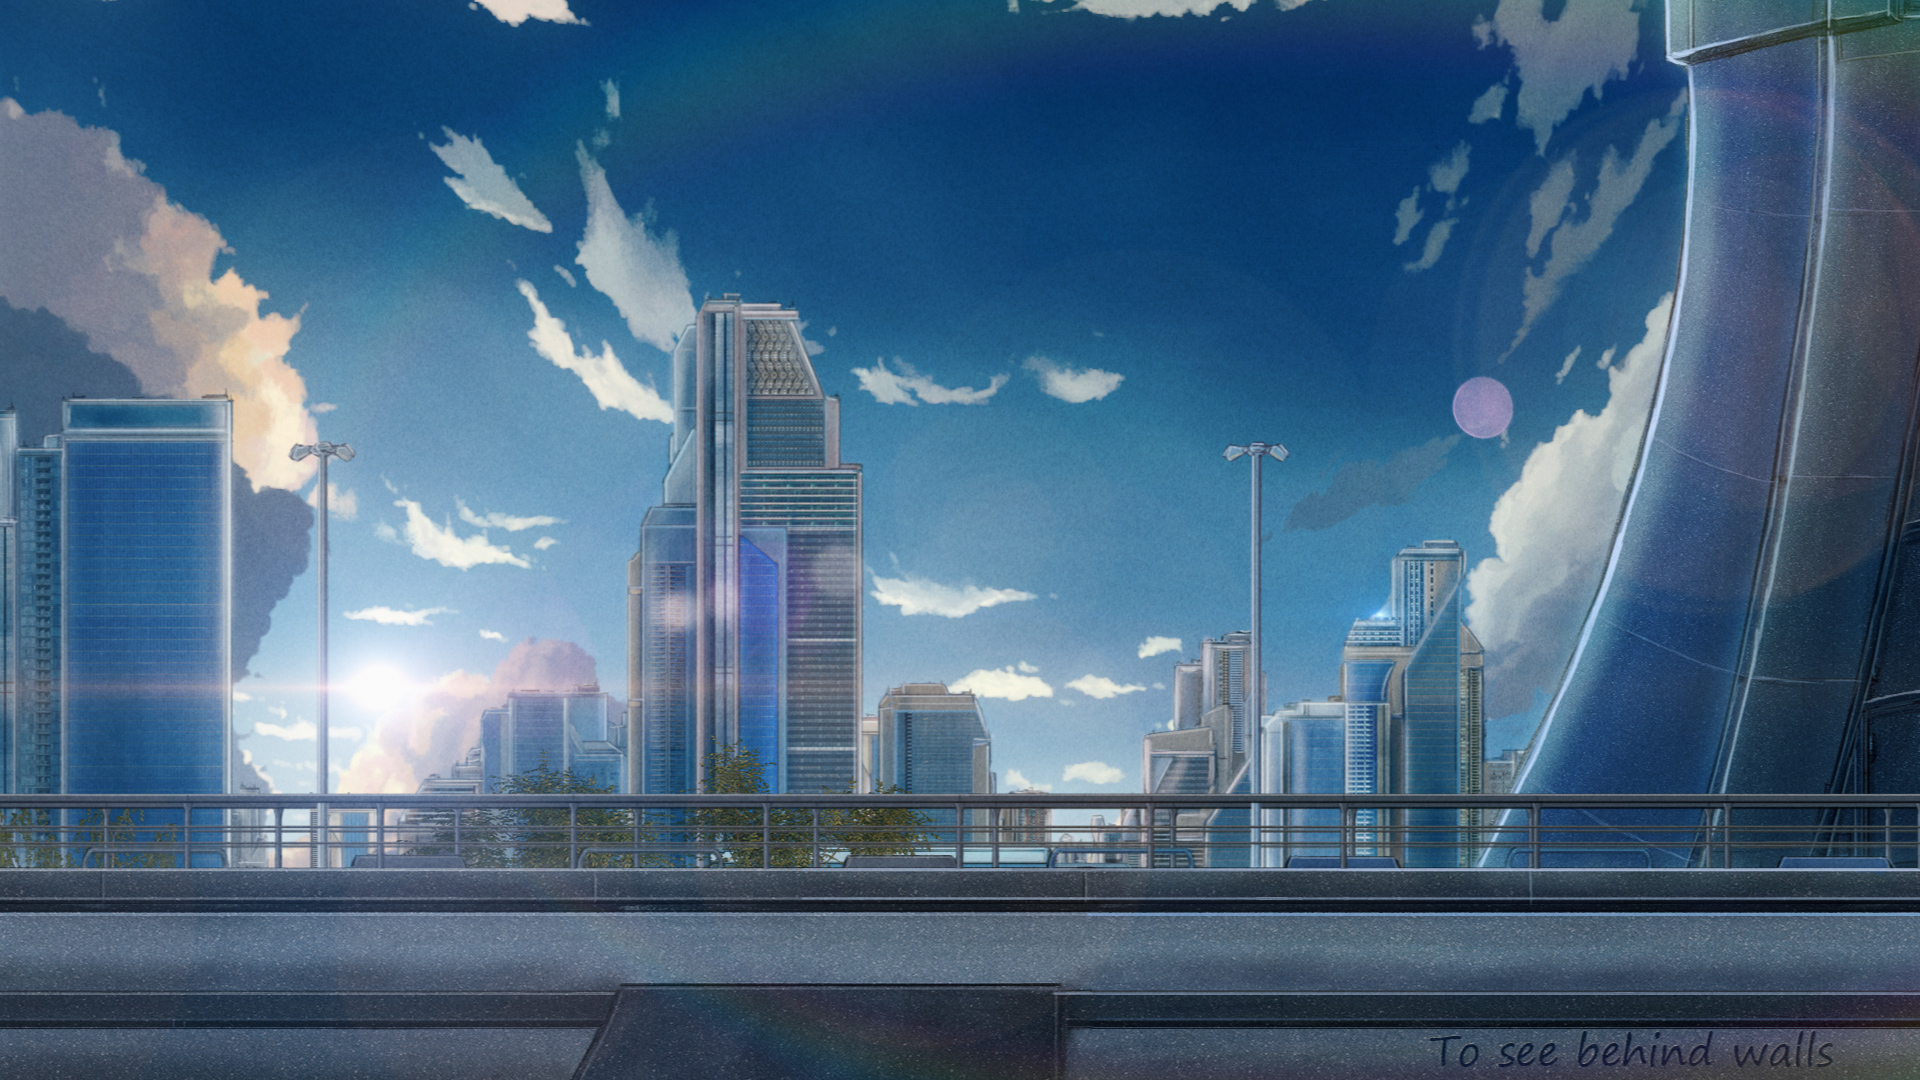 Outdoors Bridge Digital Art Anime City City Sky Morning Anime Running Building Cityscape 1920x1080